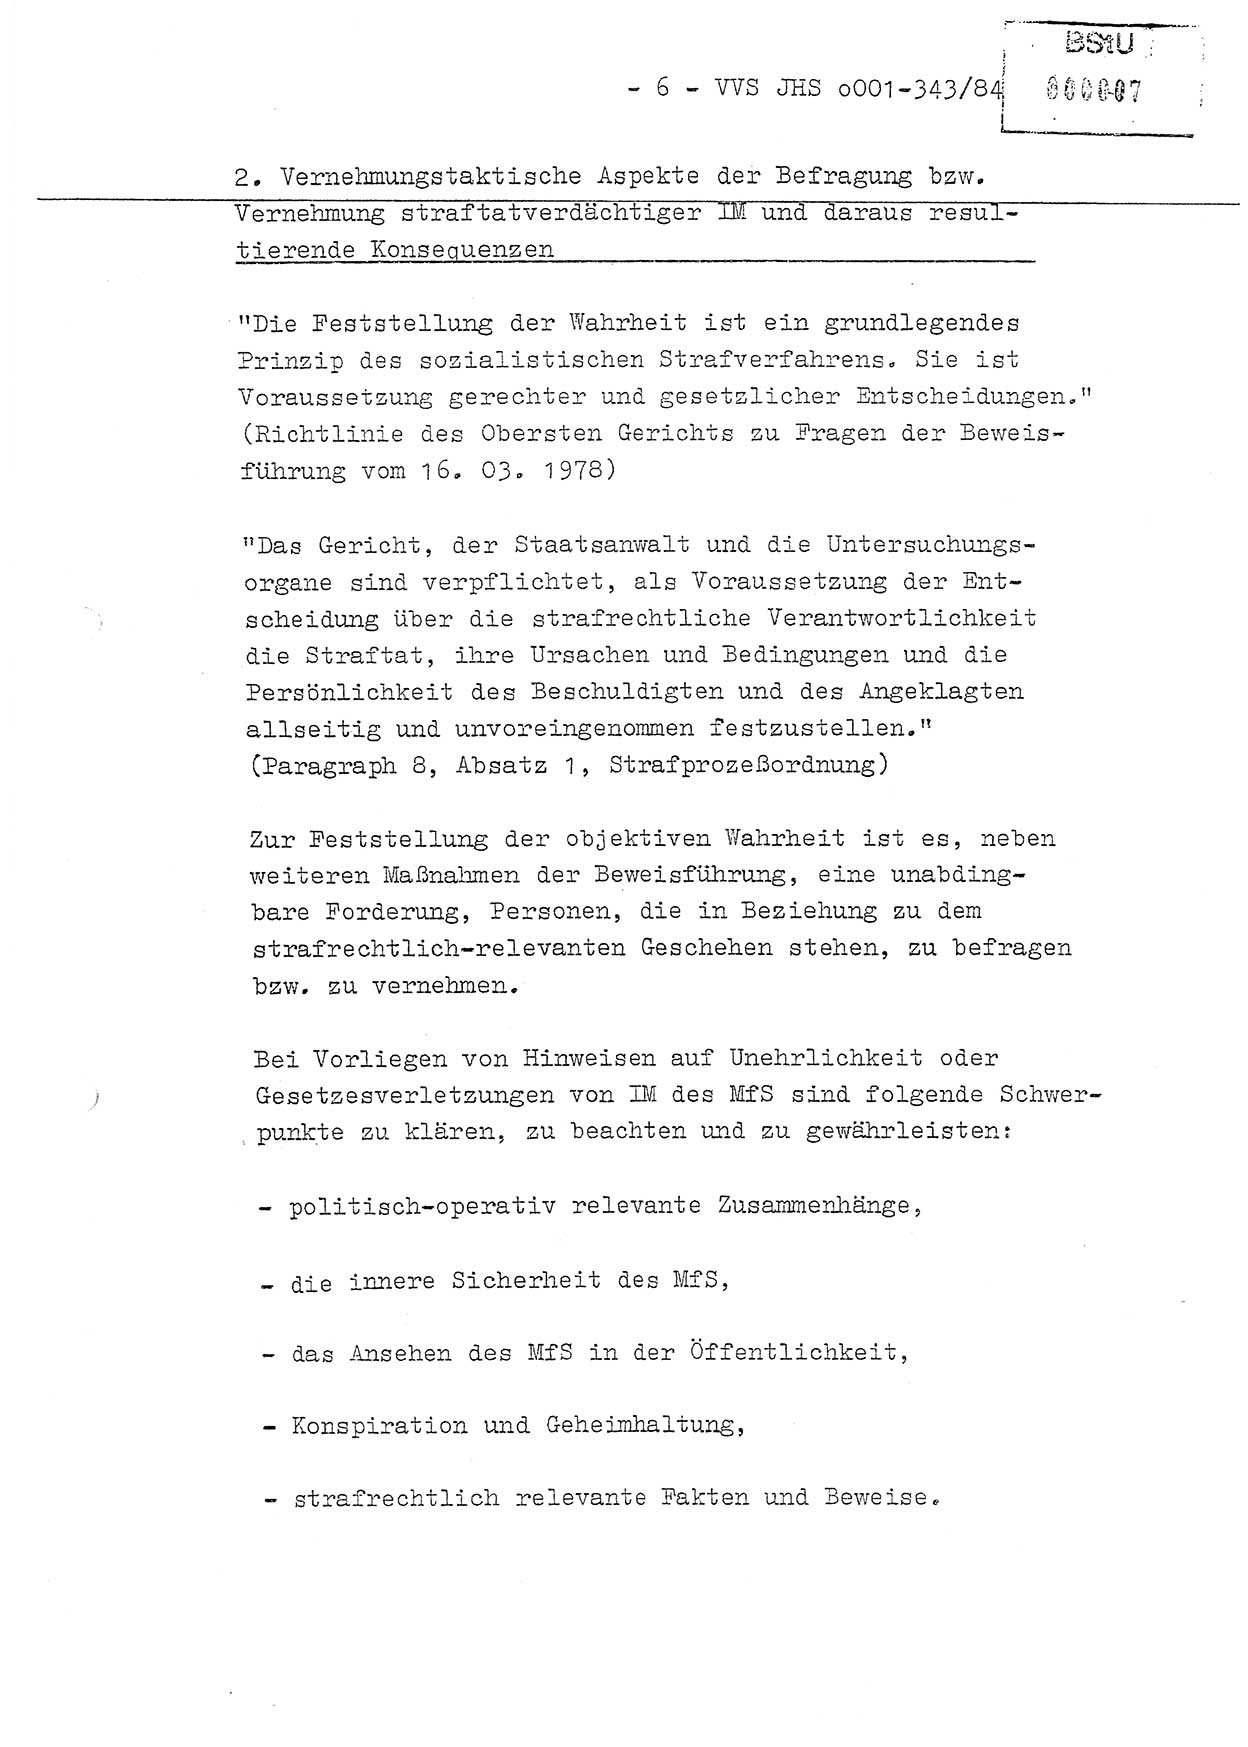 Diplomarbeit, Oberleutnant Bernd Michael (HA Ⅸ/5), Oberleutnant Peter Felber (HA IX/5), Ministerium für Staatssicherheit (MfS) [Deutsche Demokratische Republik (DDR)], Juristische Hochschule (JHS), Vertrauliche Verschlußsache (VVS) o001-343/84, Potsdam 1985, Seite 6 (Dipl.-Arb. MfS DDR JHS VVS o001-343/84 1985, S. 6)